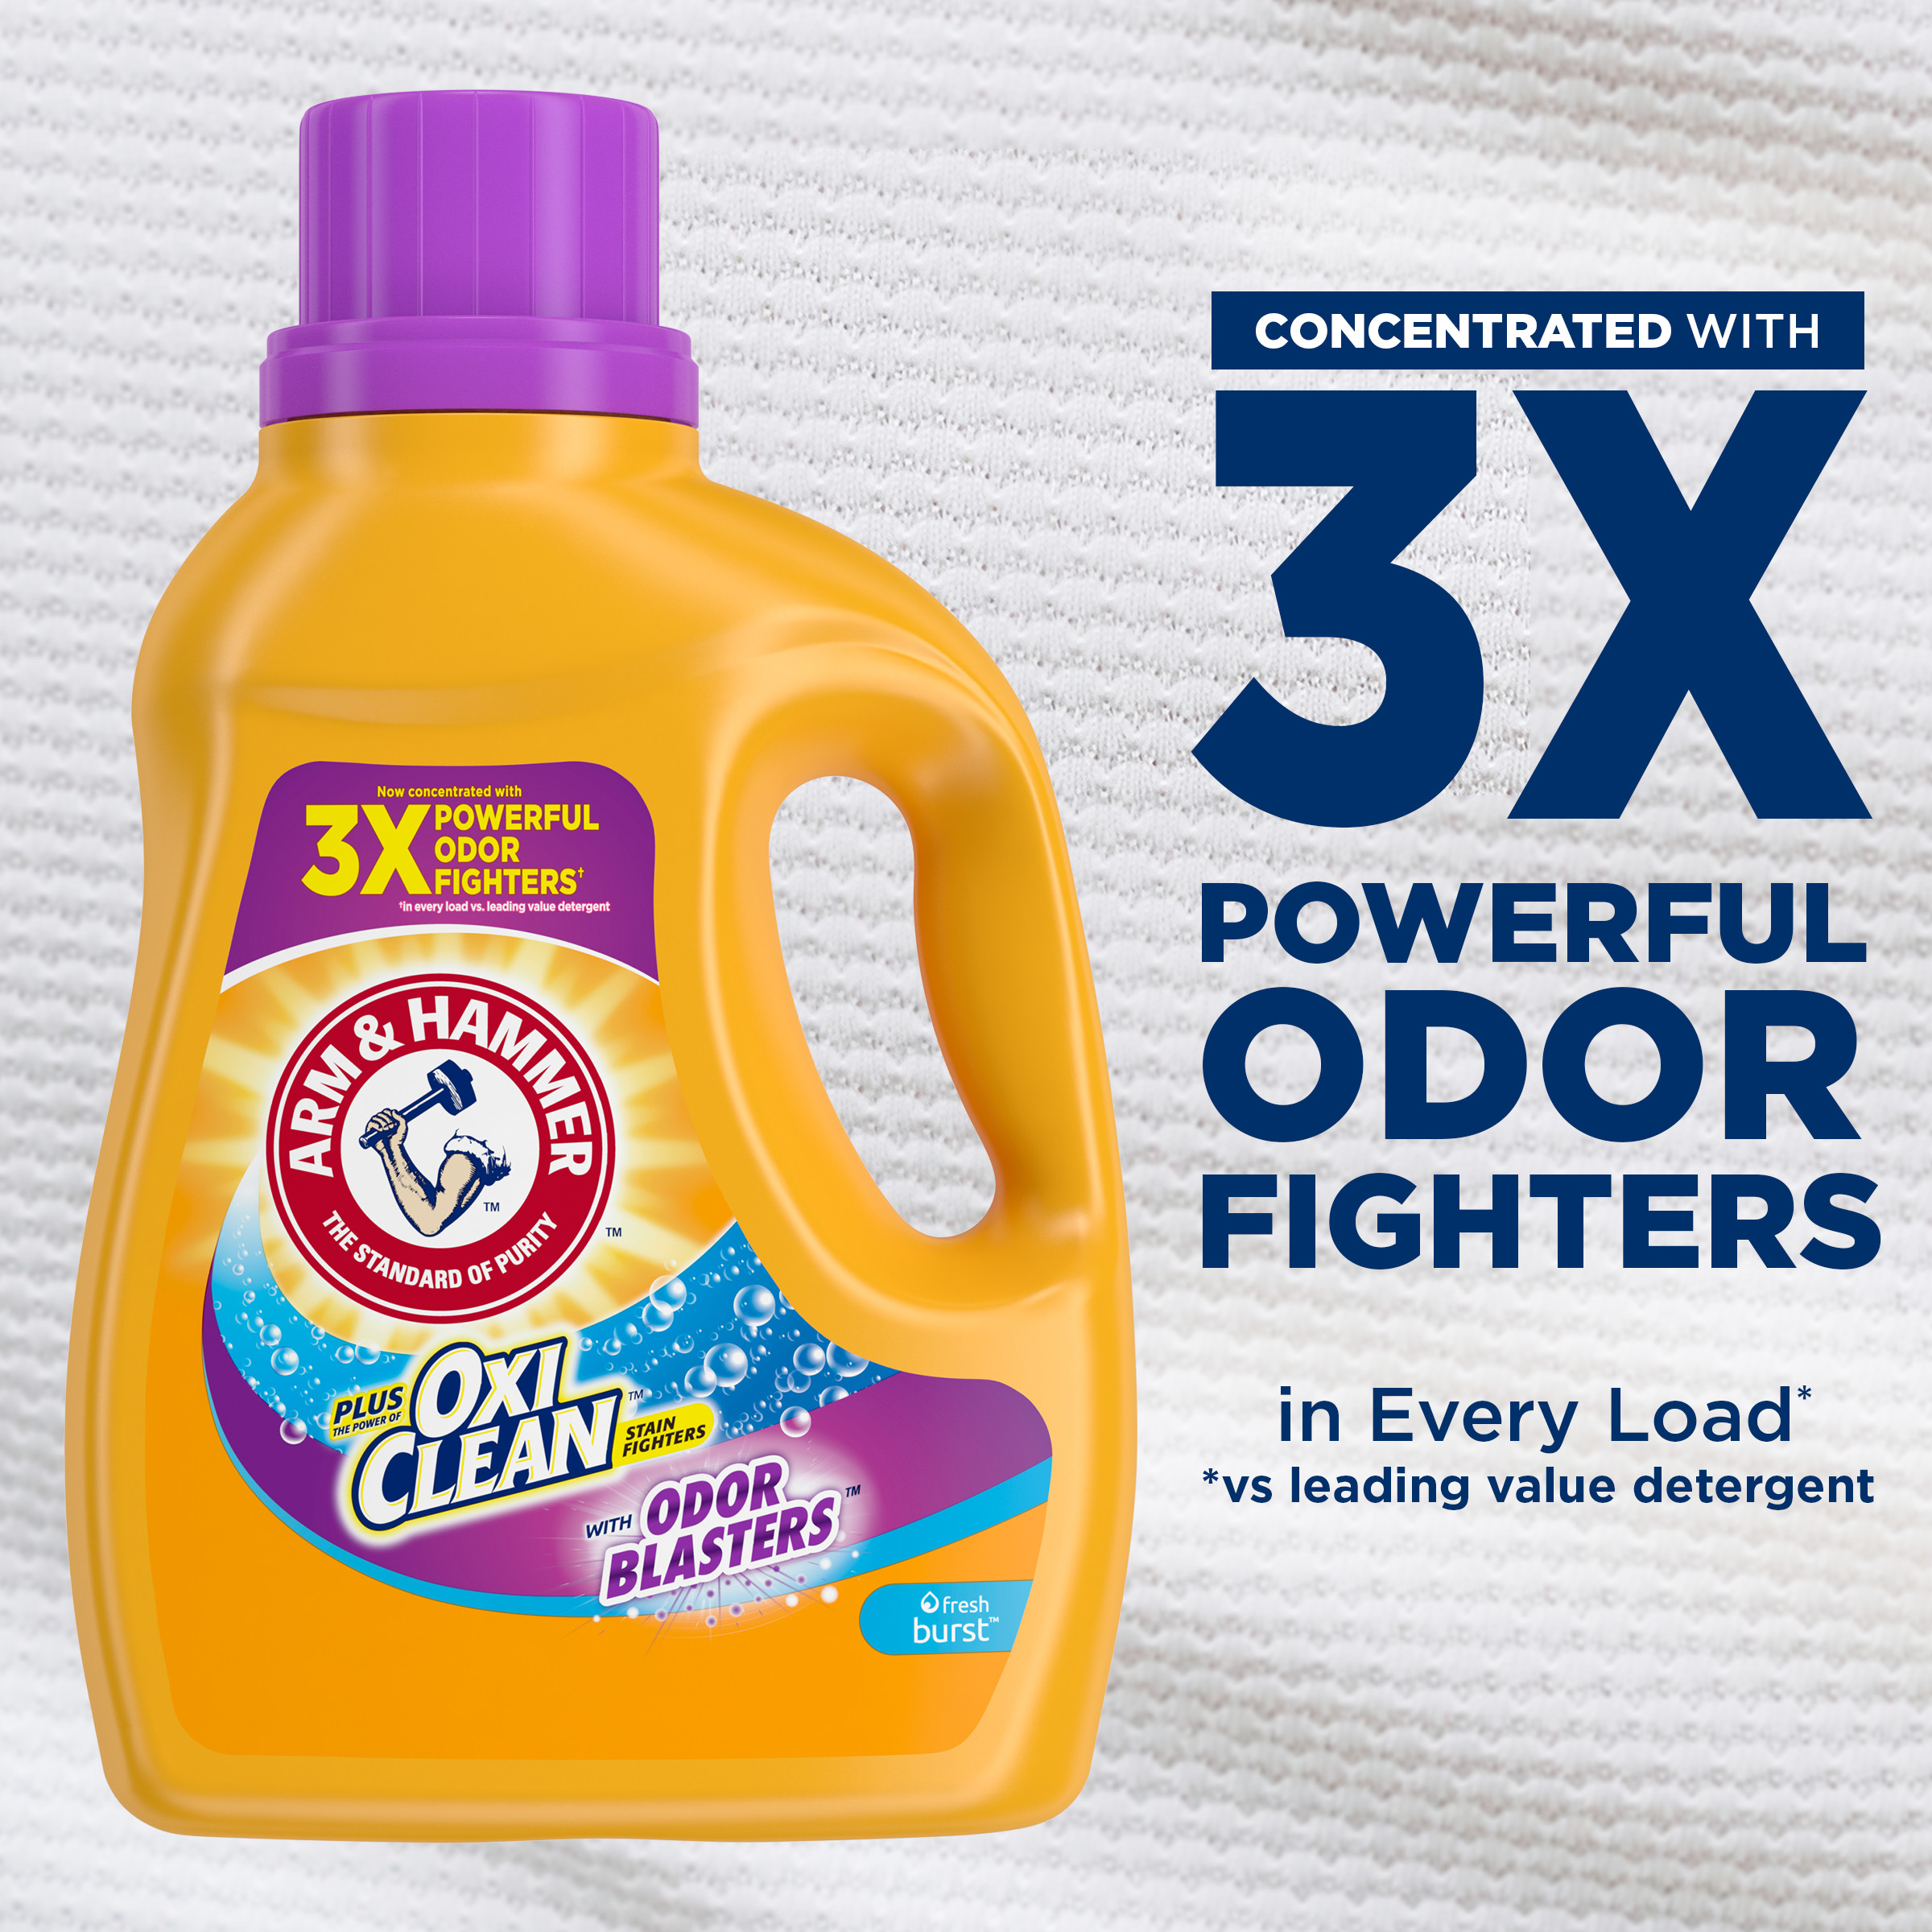 Arm & Hammer Plus OxiClean Odor Blasters Fresh Burst, 77 Loads Liquid Laundry Detergent, 100.5 fl oz - image 6 of 16